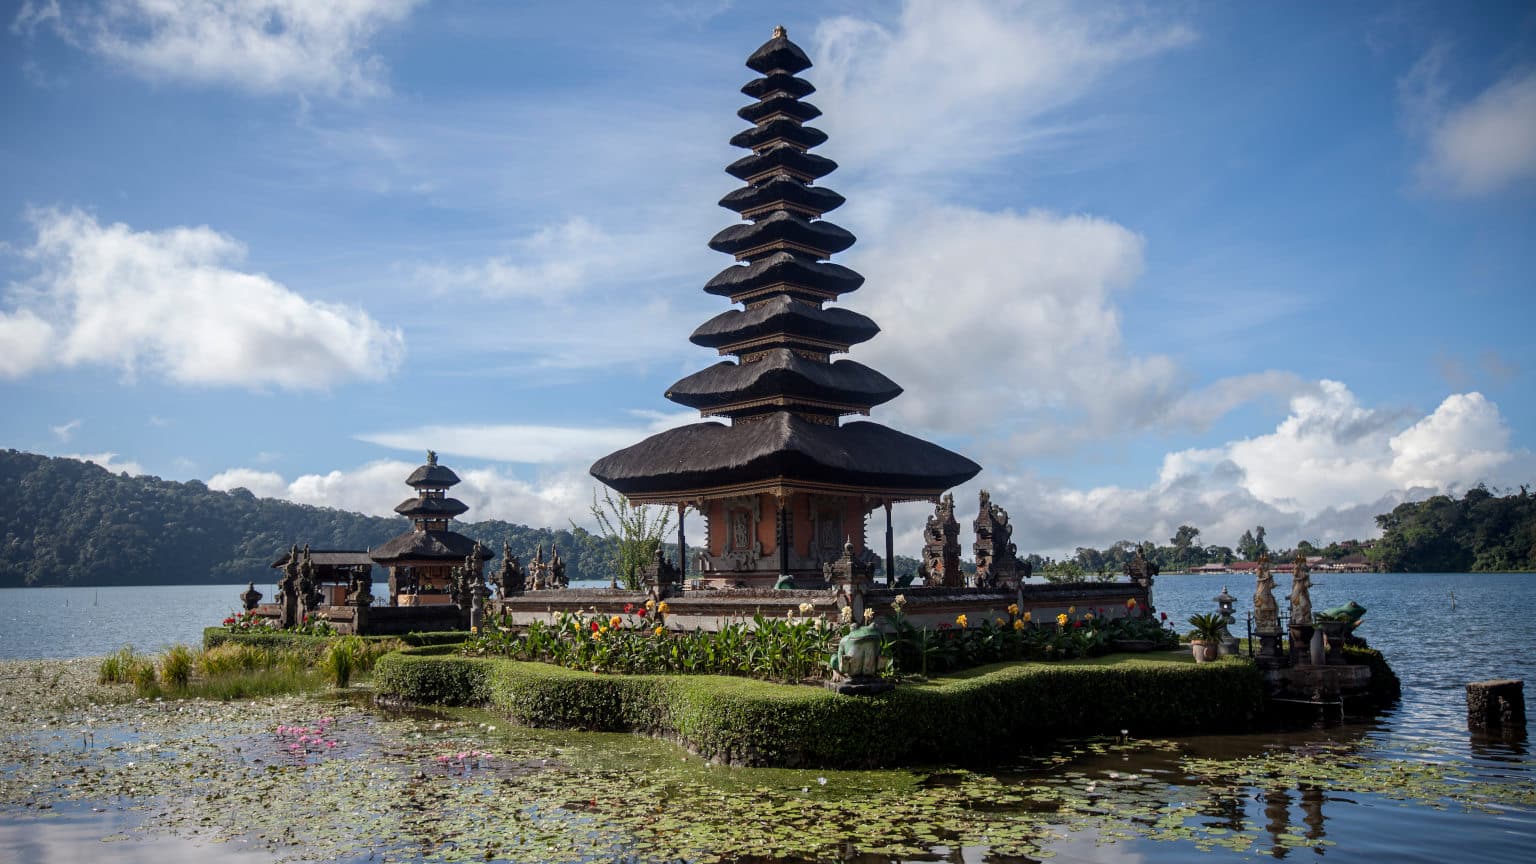 Bali Dalem Bratan Temple